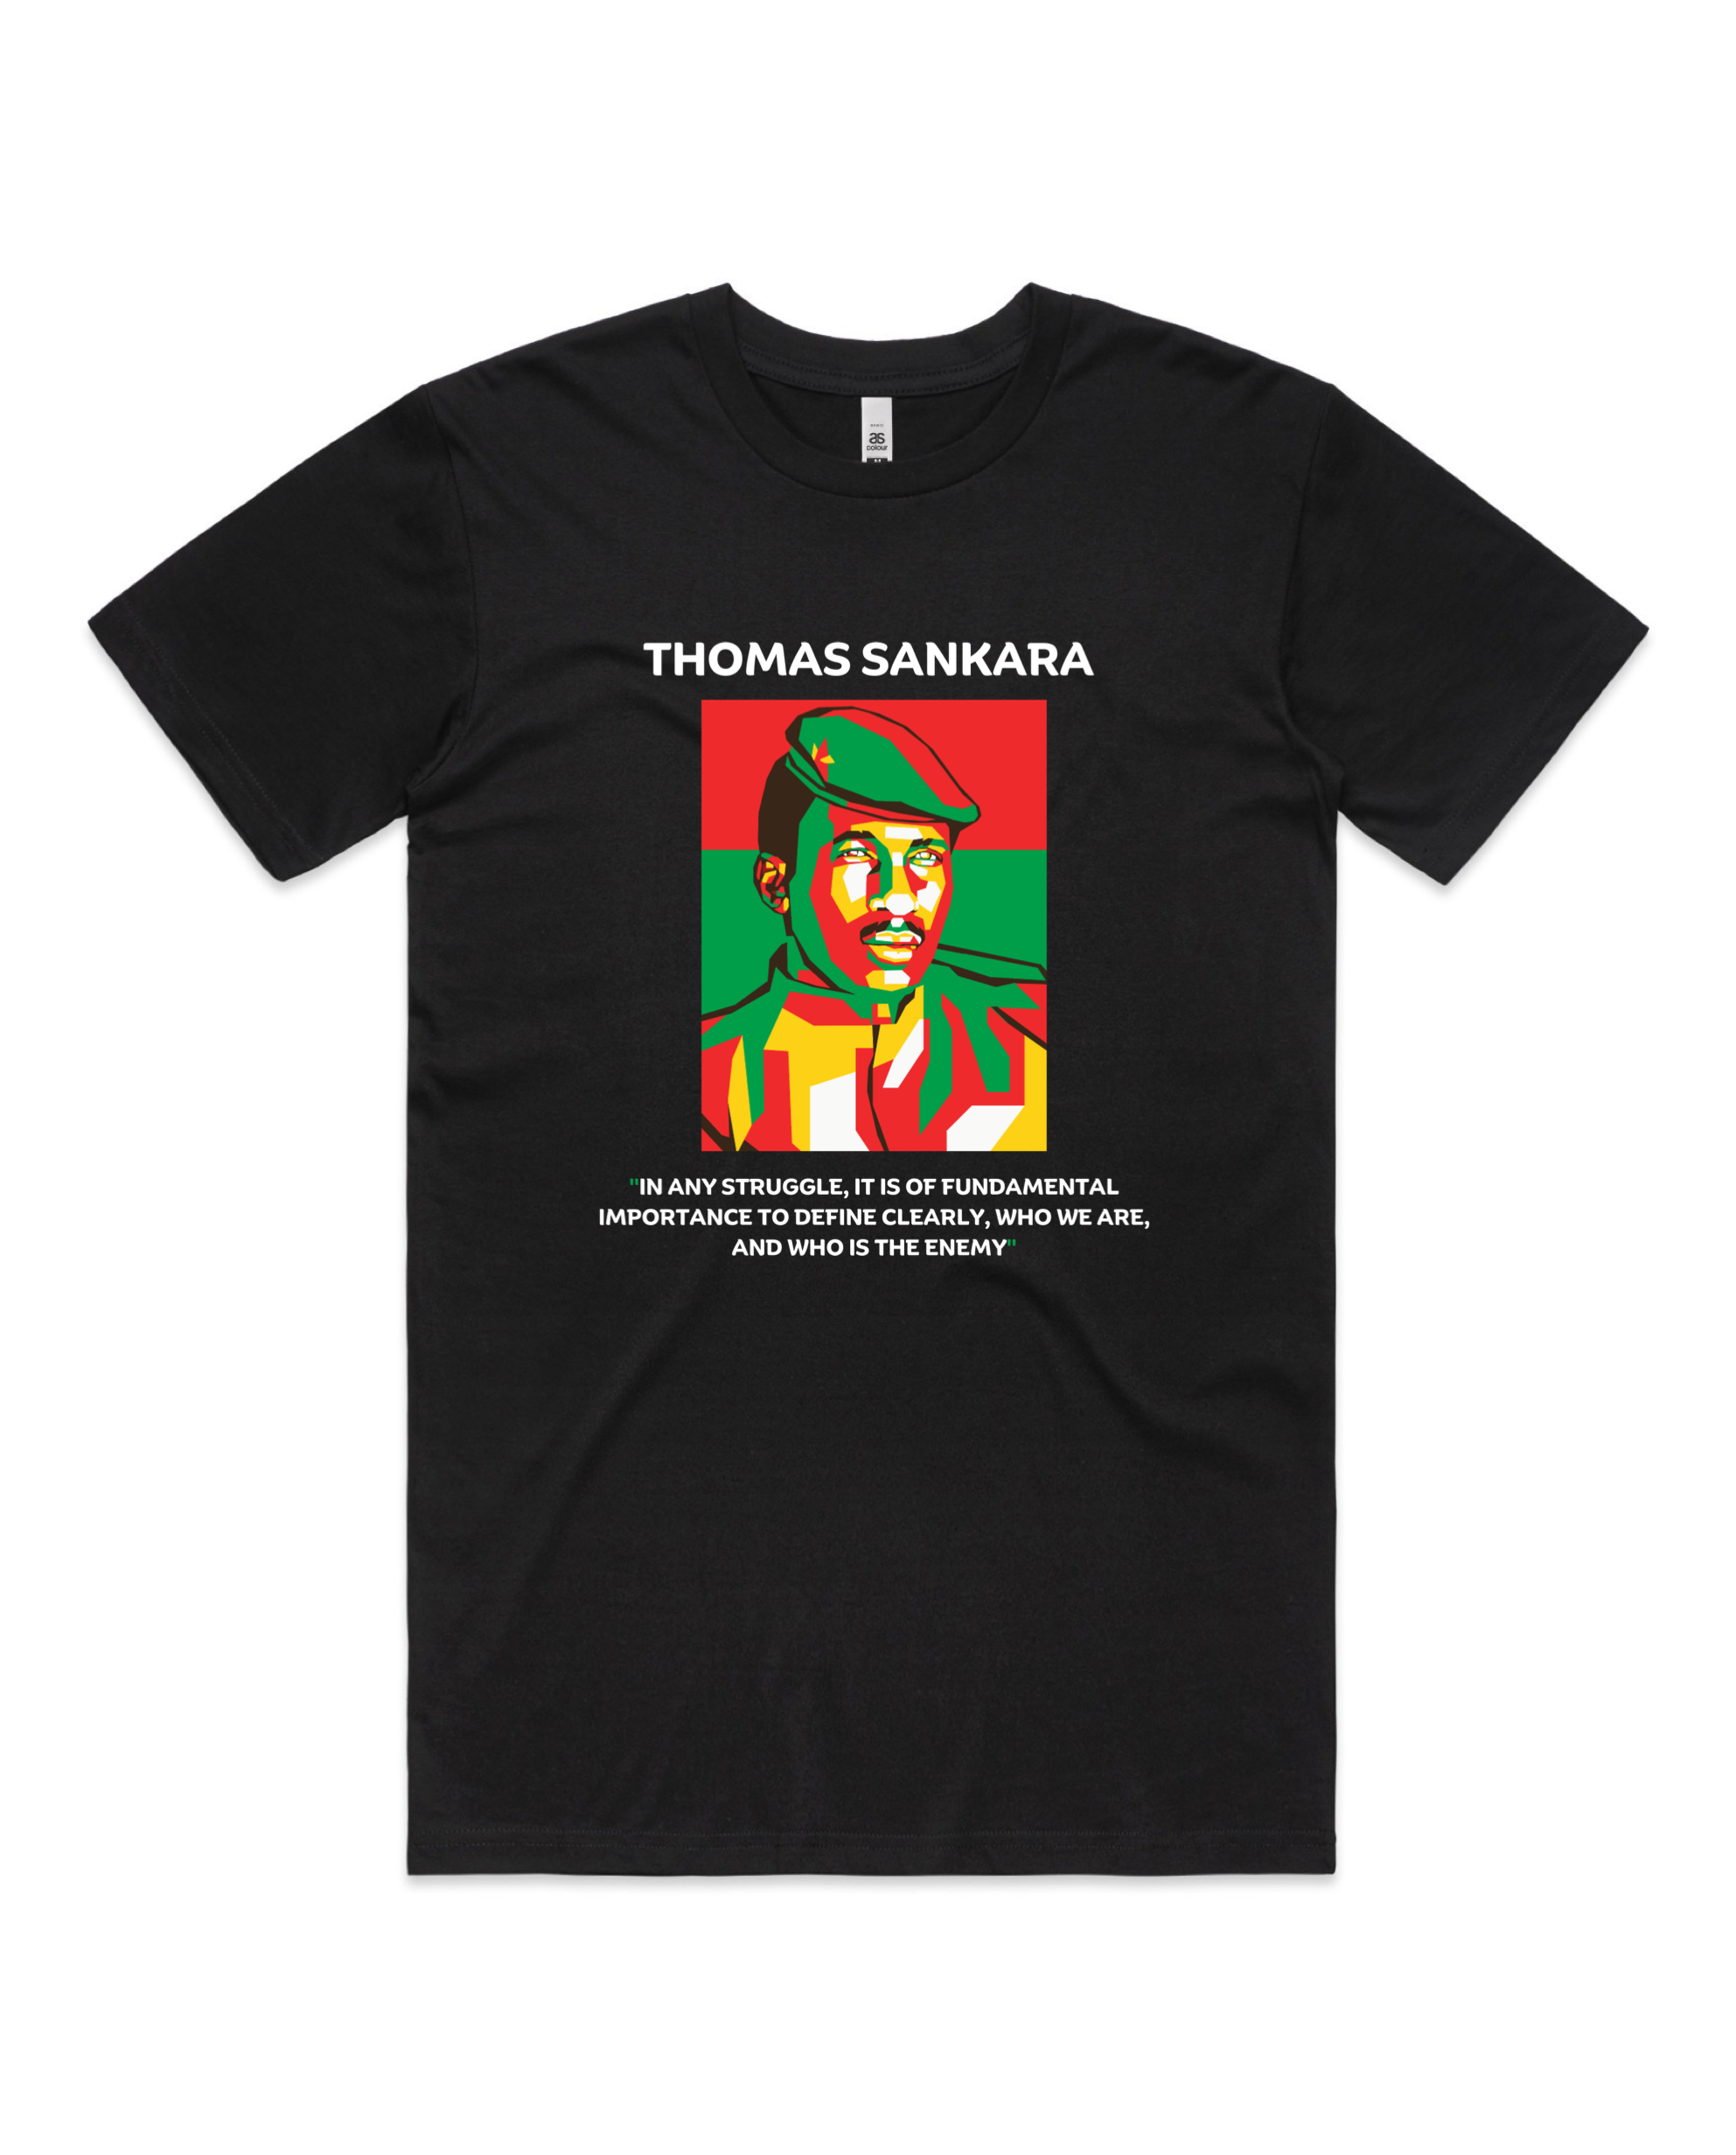 Who is Thomas Sankara?